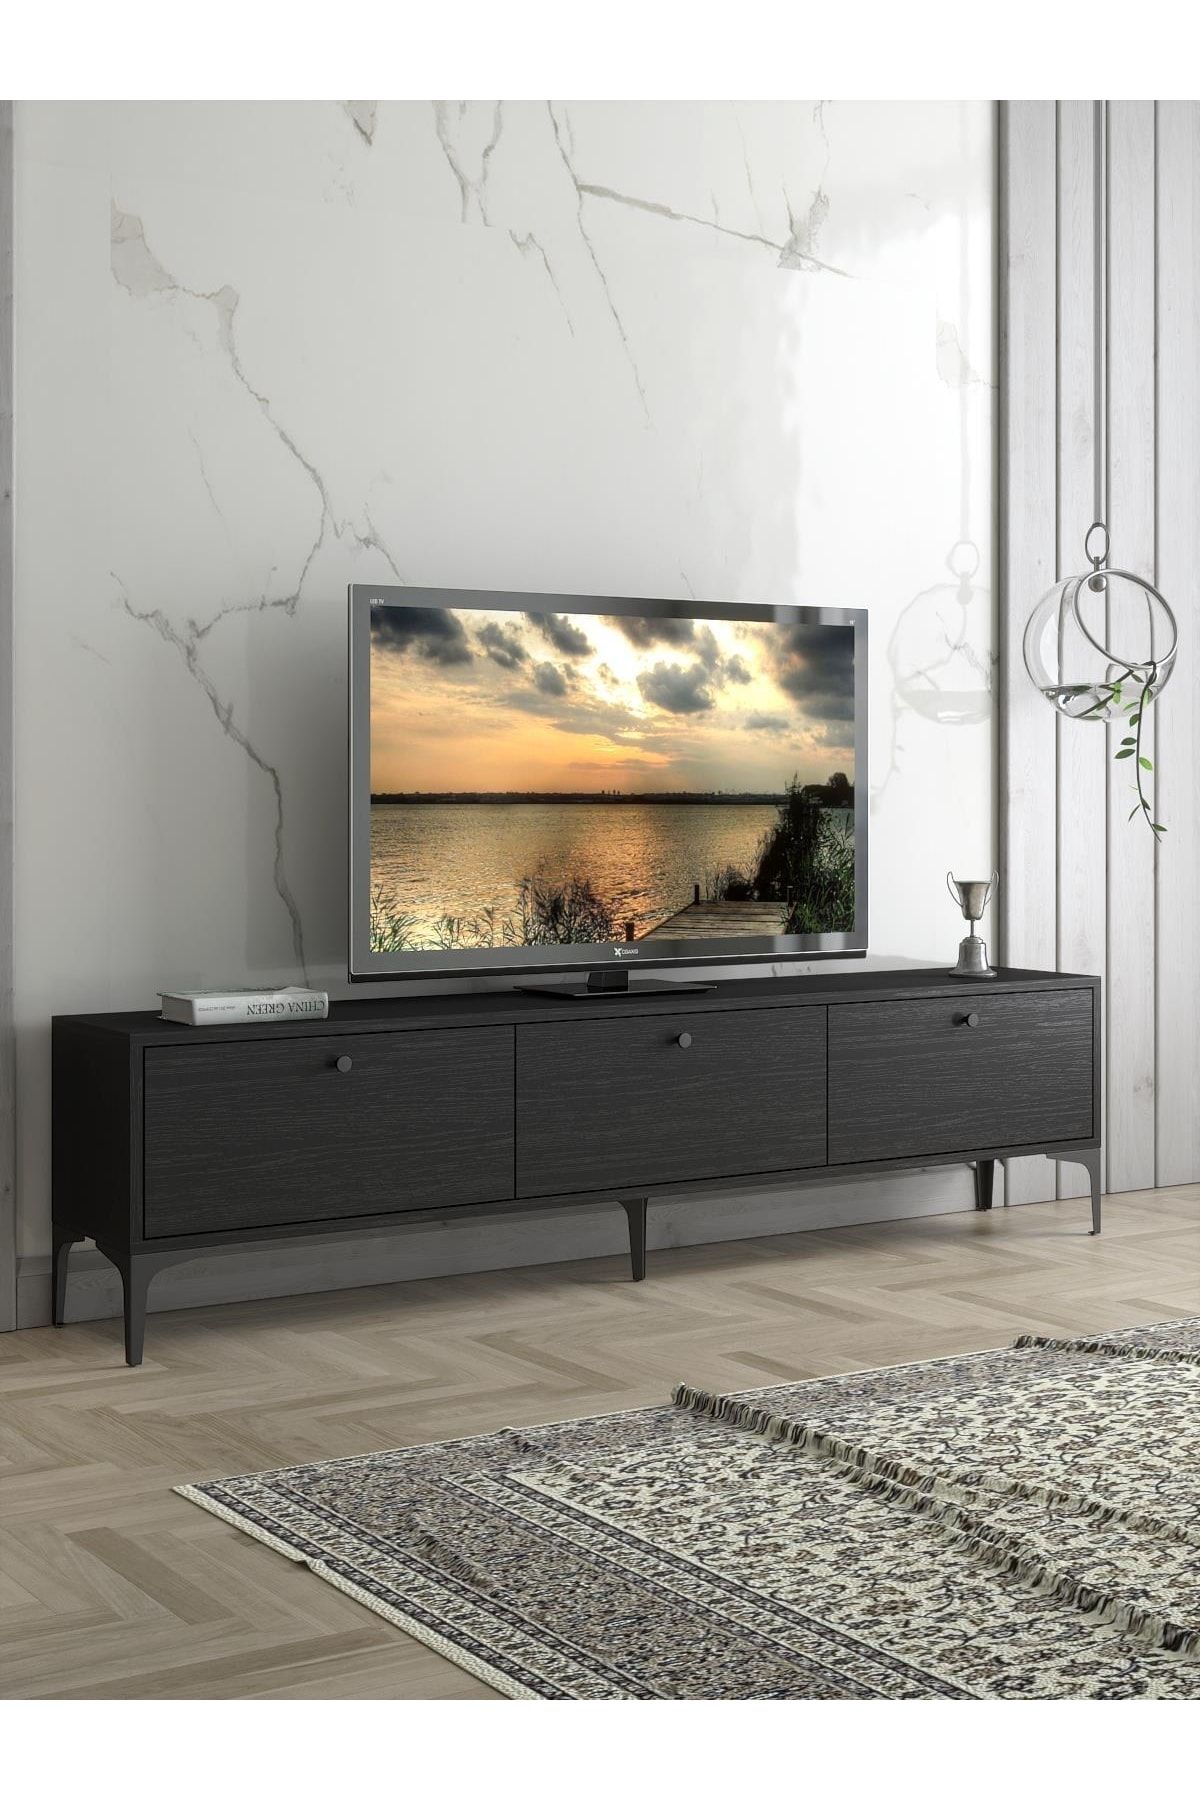 Wood'n Love Etna Premium Metal Ayaklı Dolaplı 180 Cm Tv Ünitesi - Siyah / Siyah